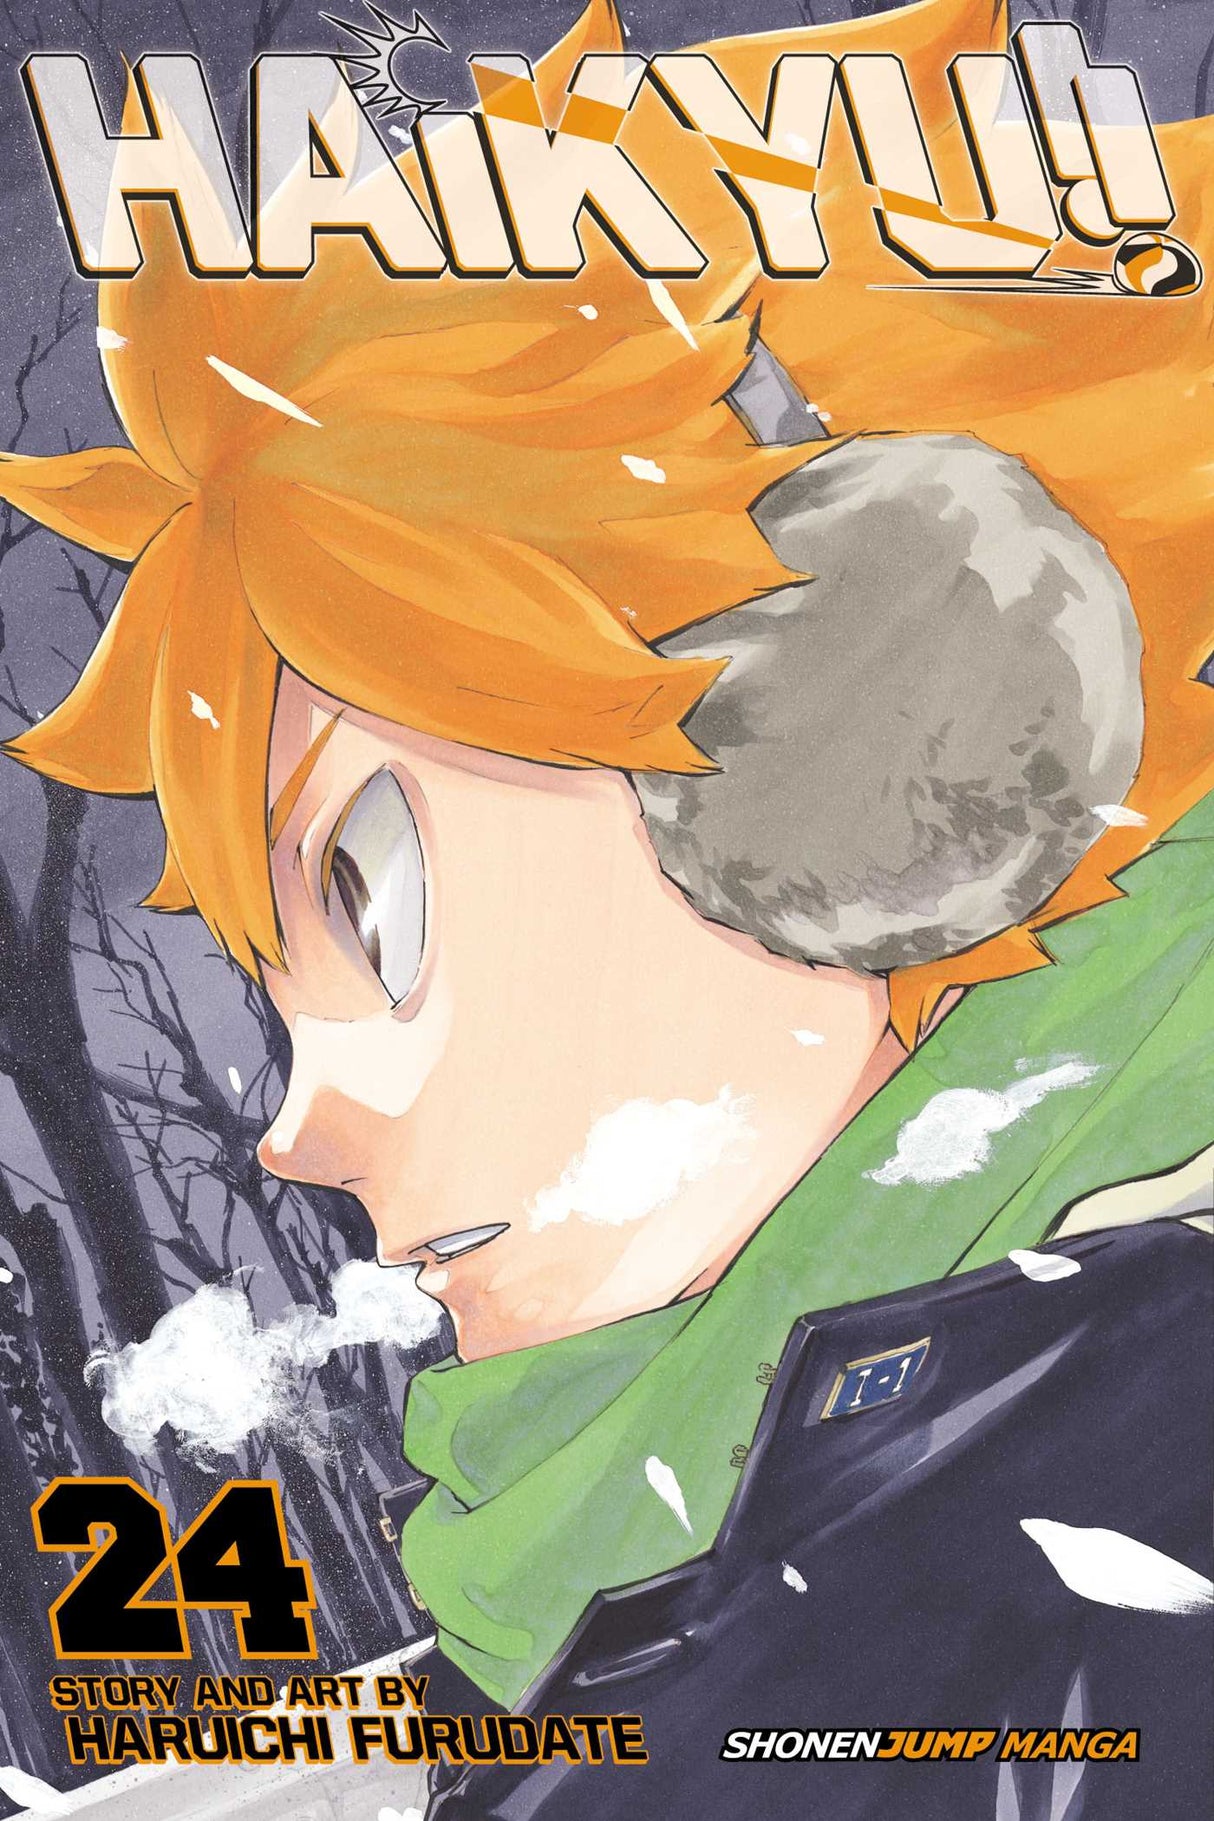 Cover image of the Manga Haikyu!!, Vol. 24